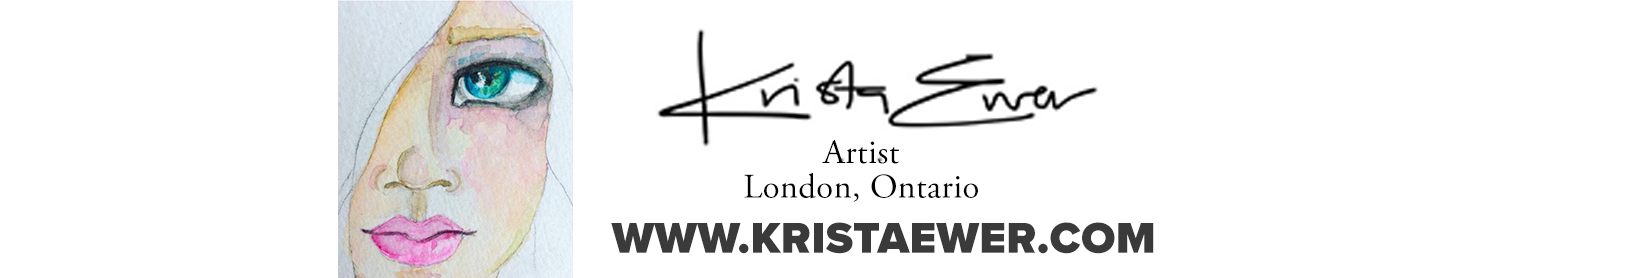 Krista Ewer Artist London, www.kristaewer.com